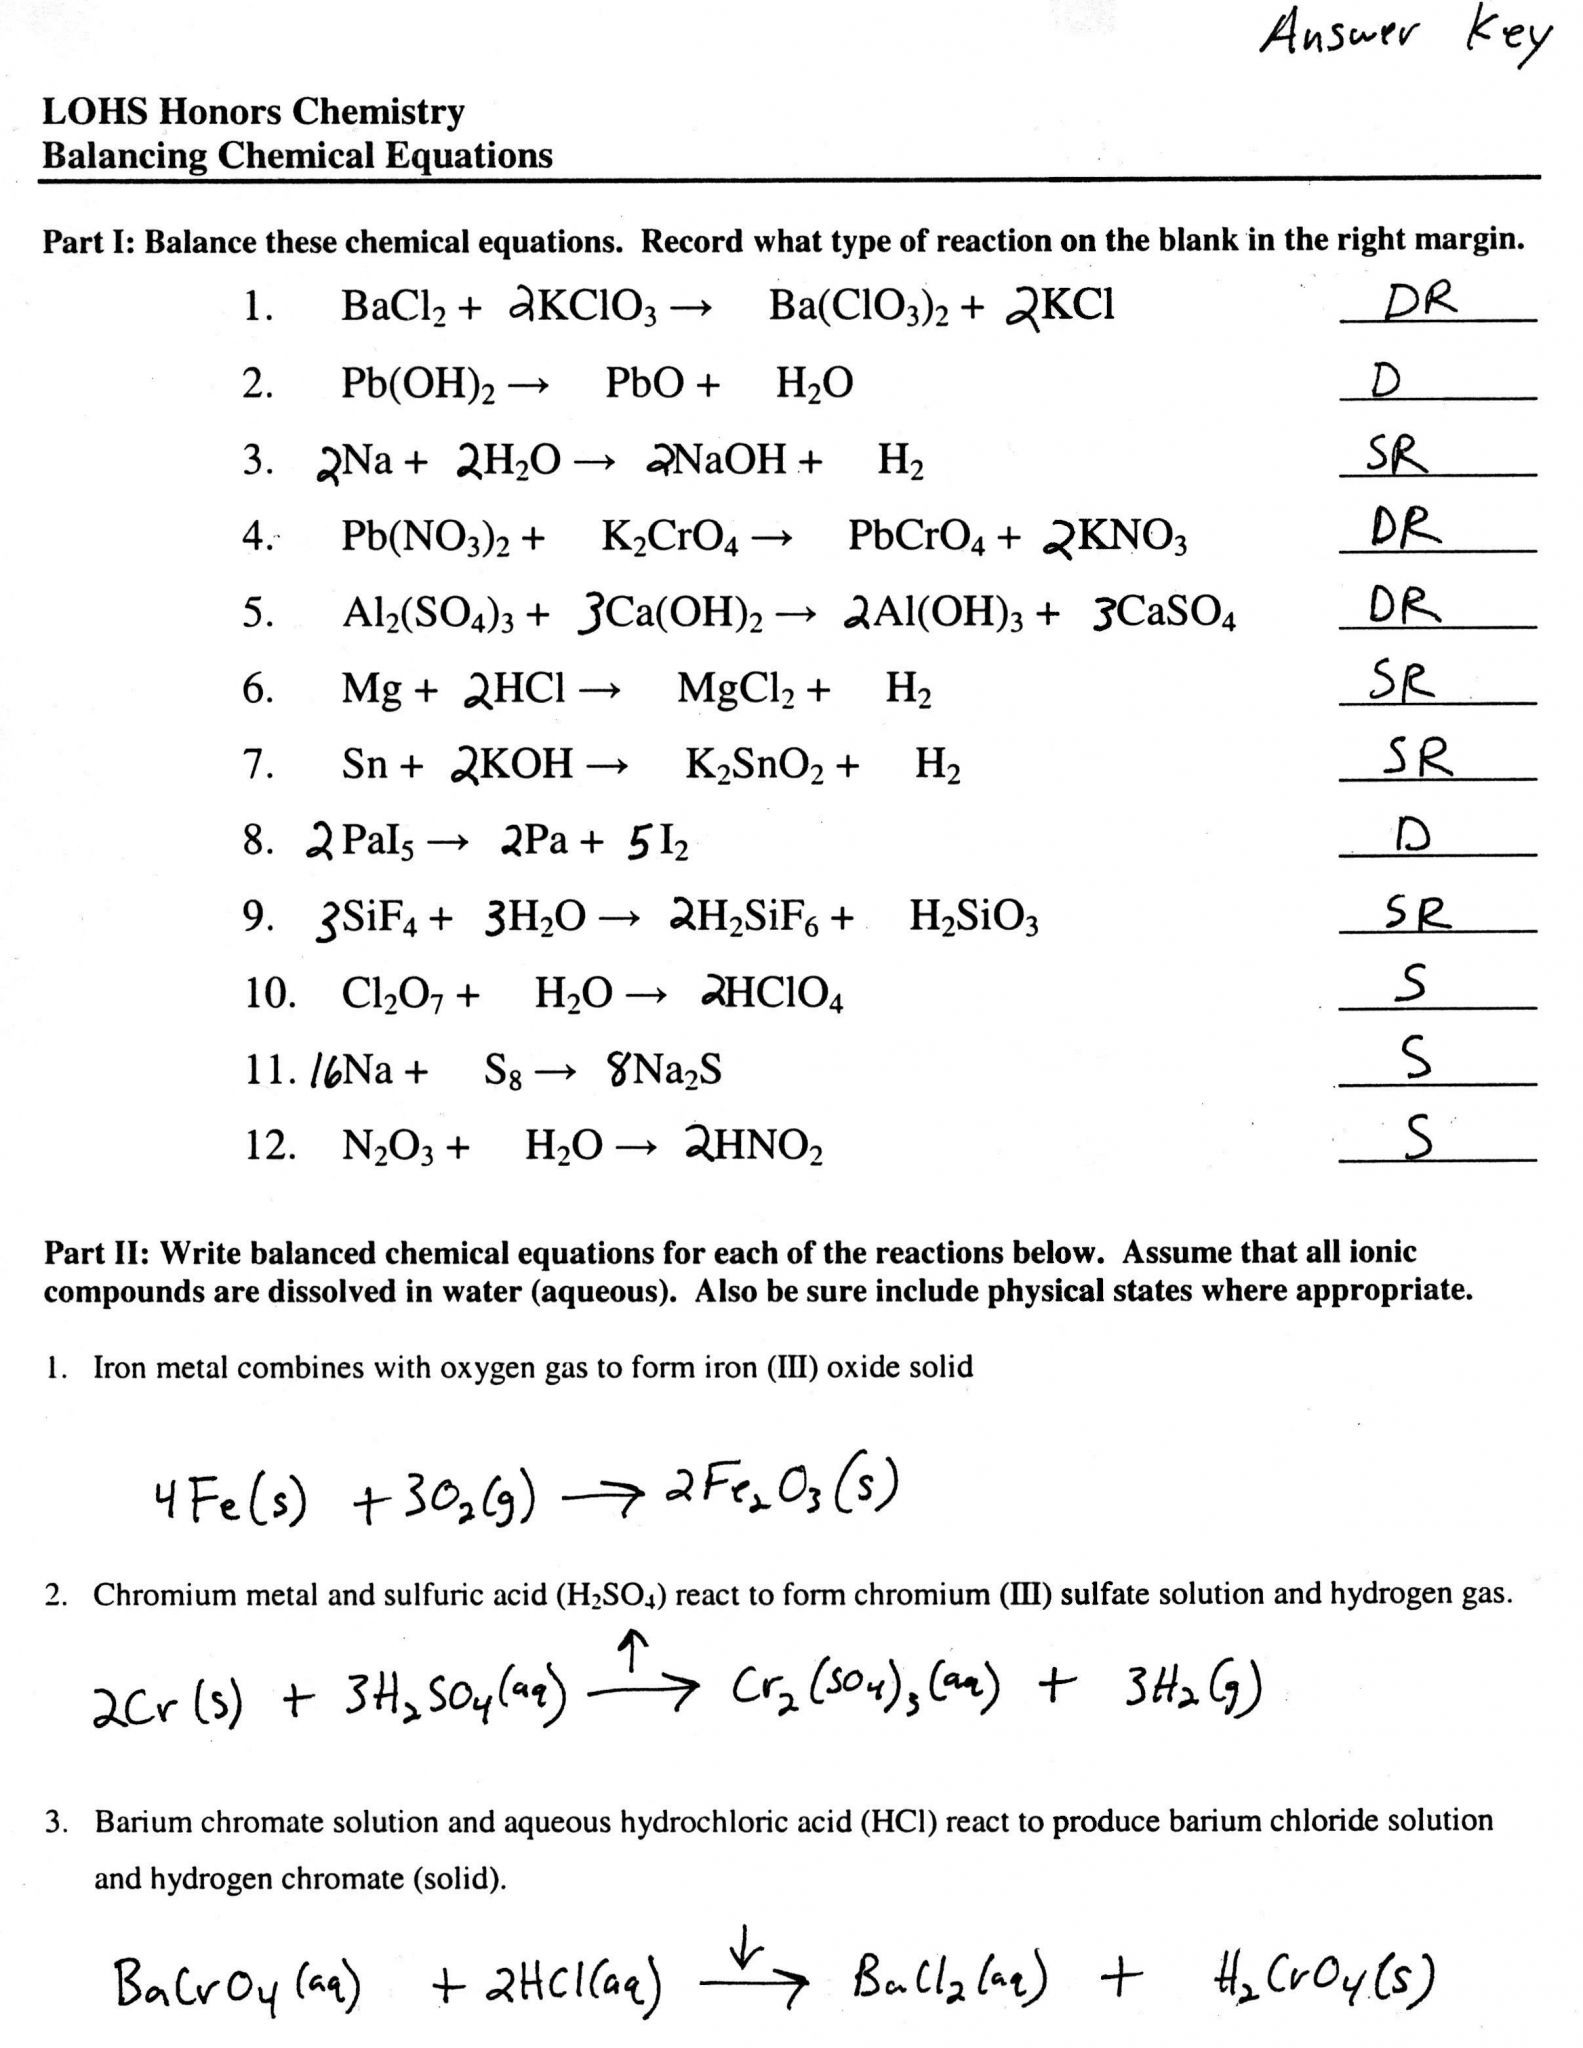 balancing chemical equations homework answers